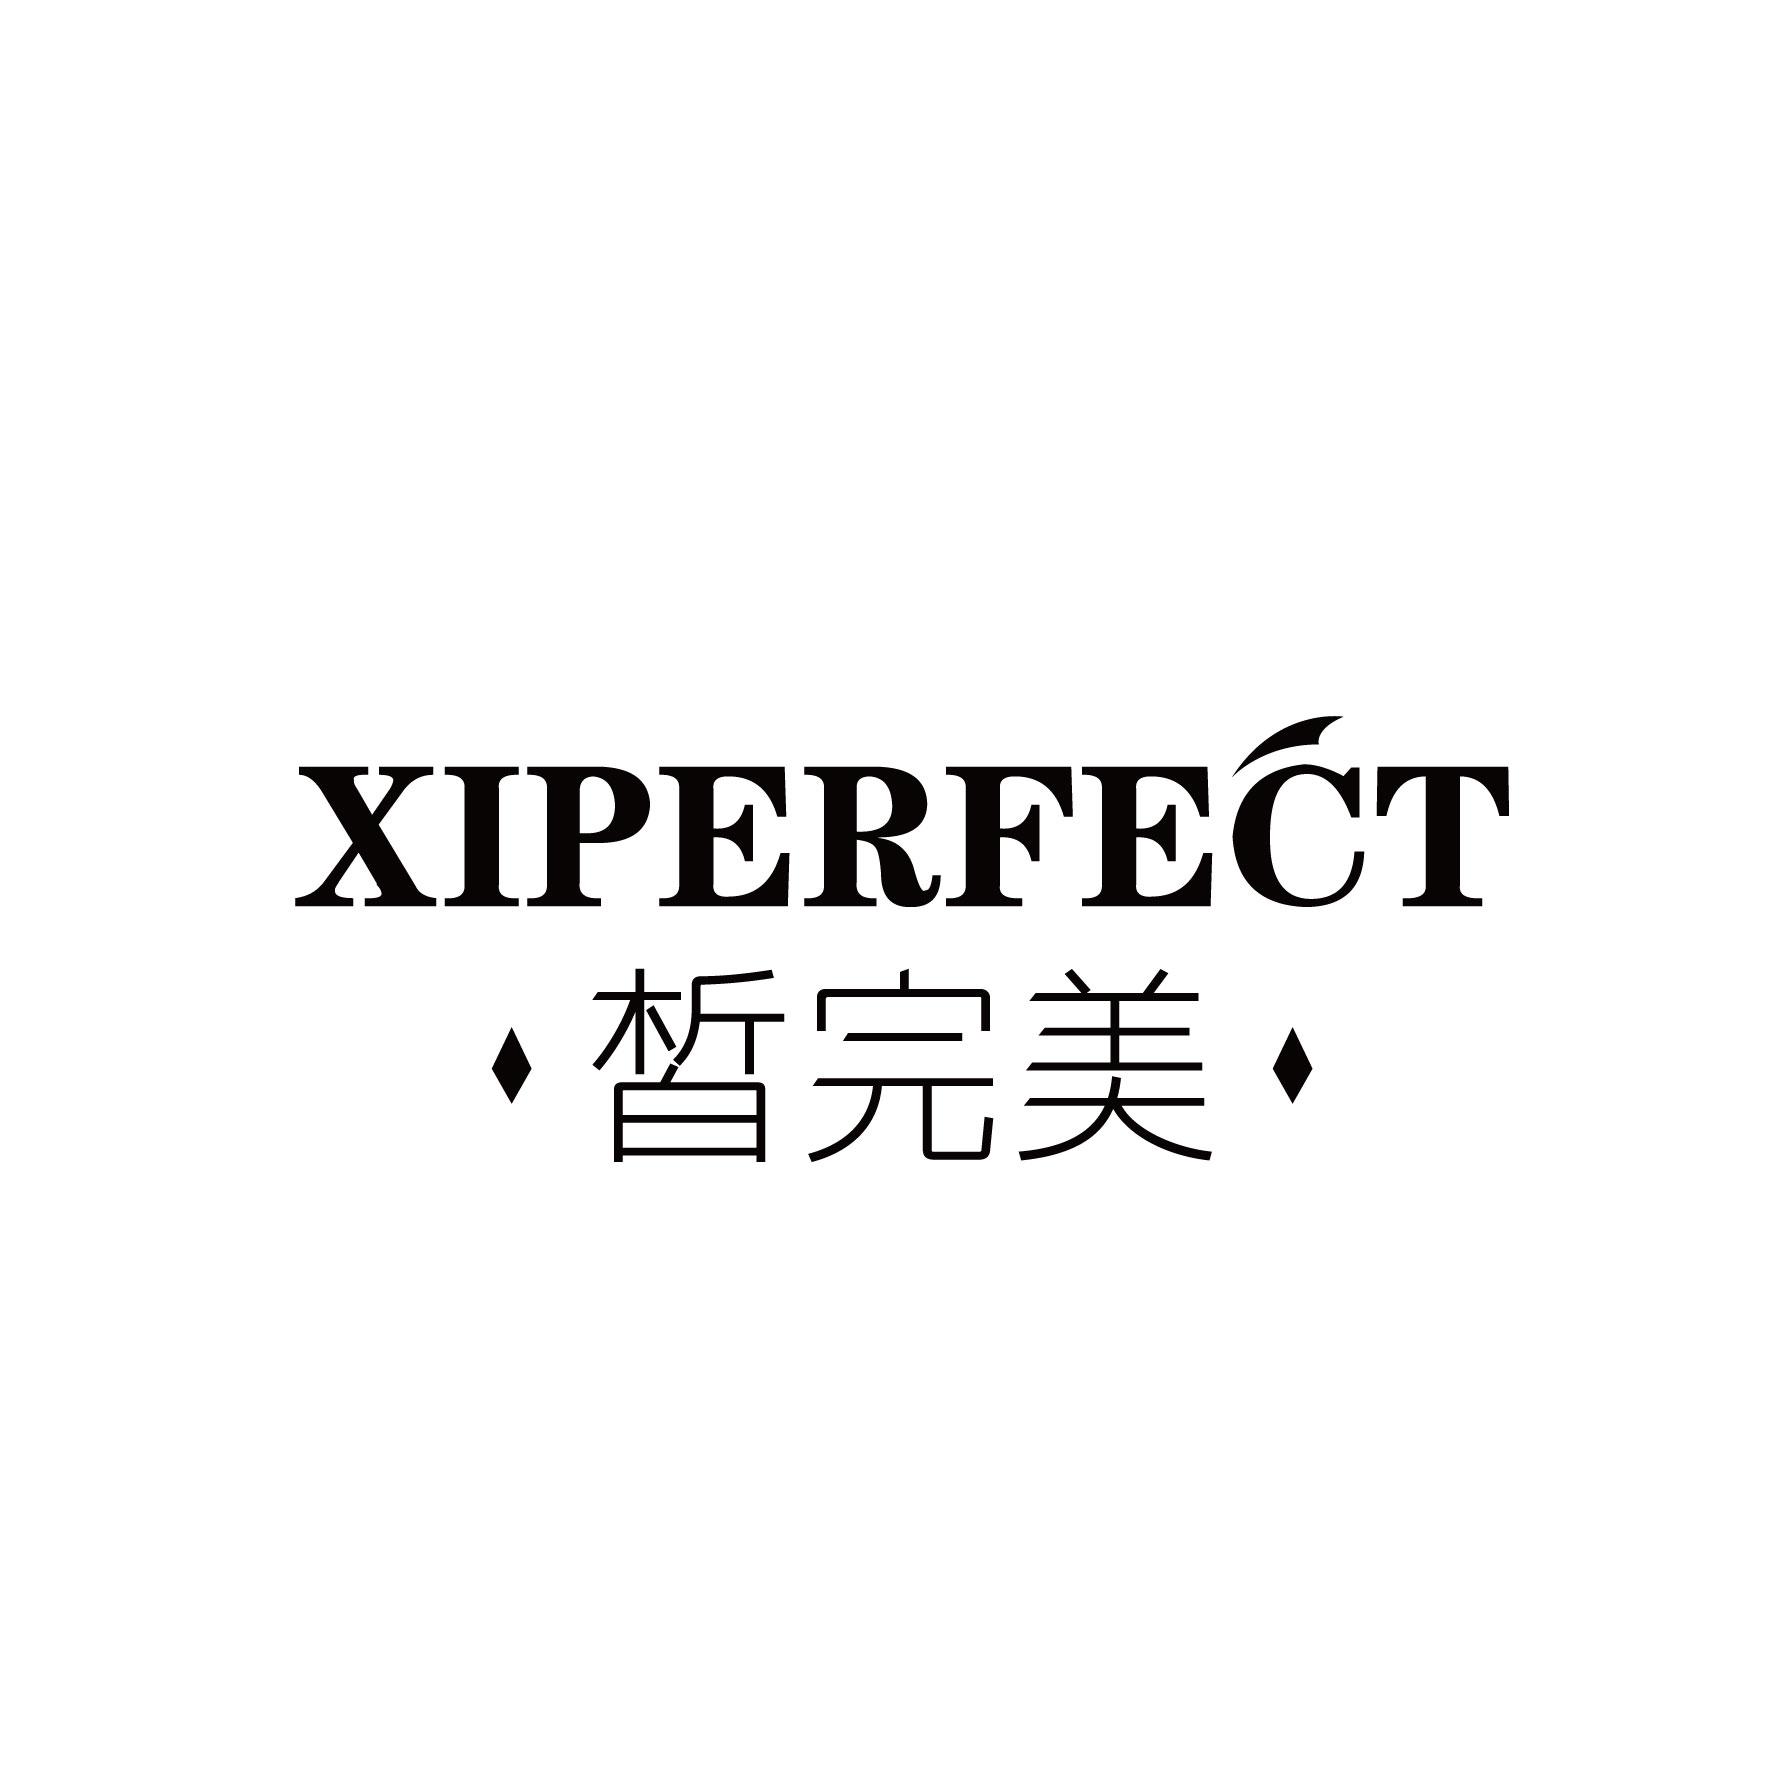 皙完美 XIPERFECT